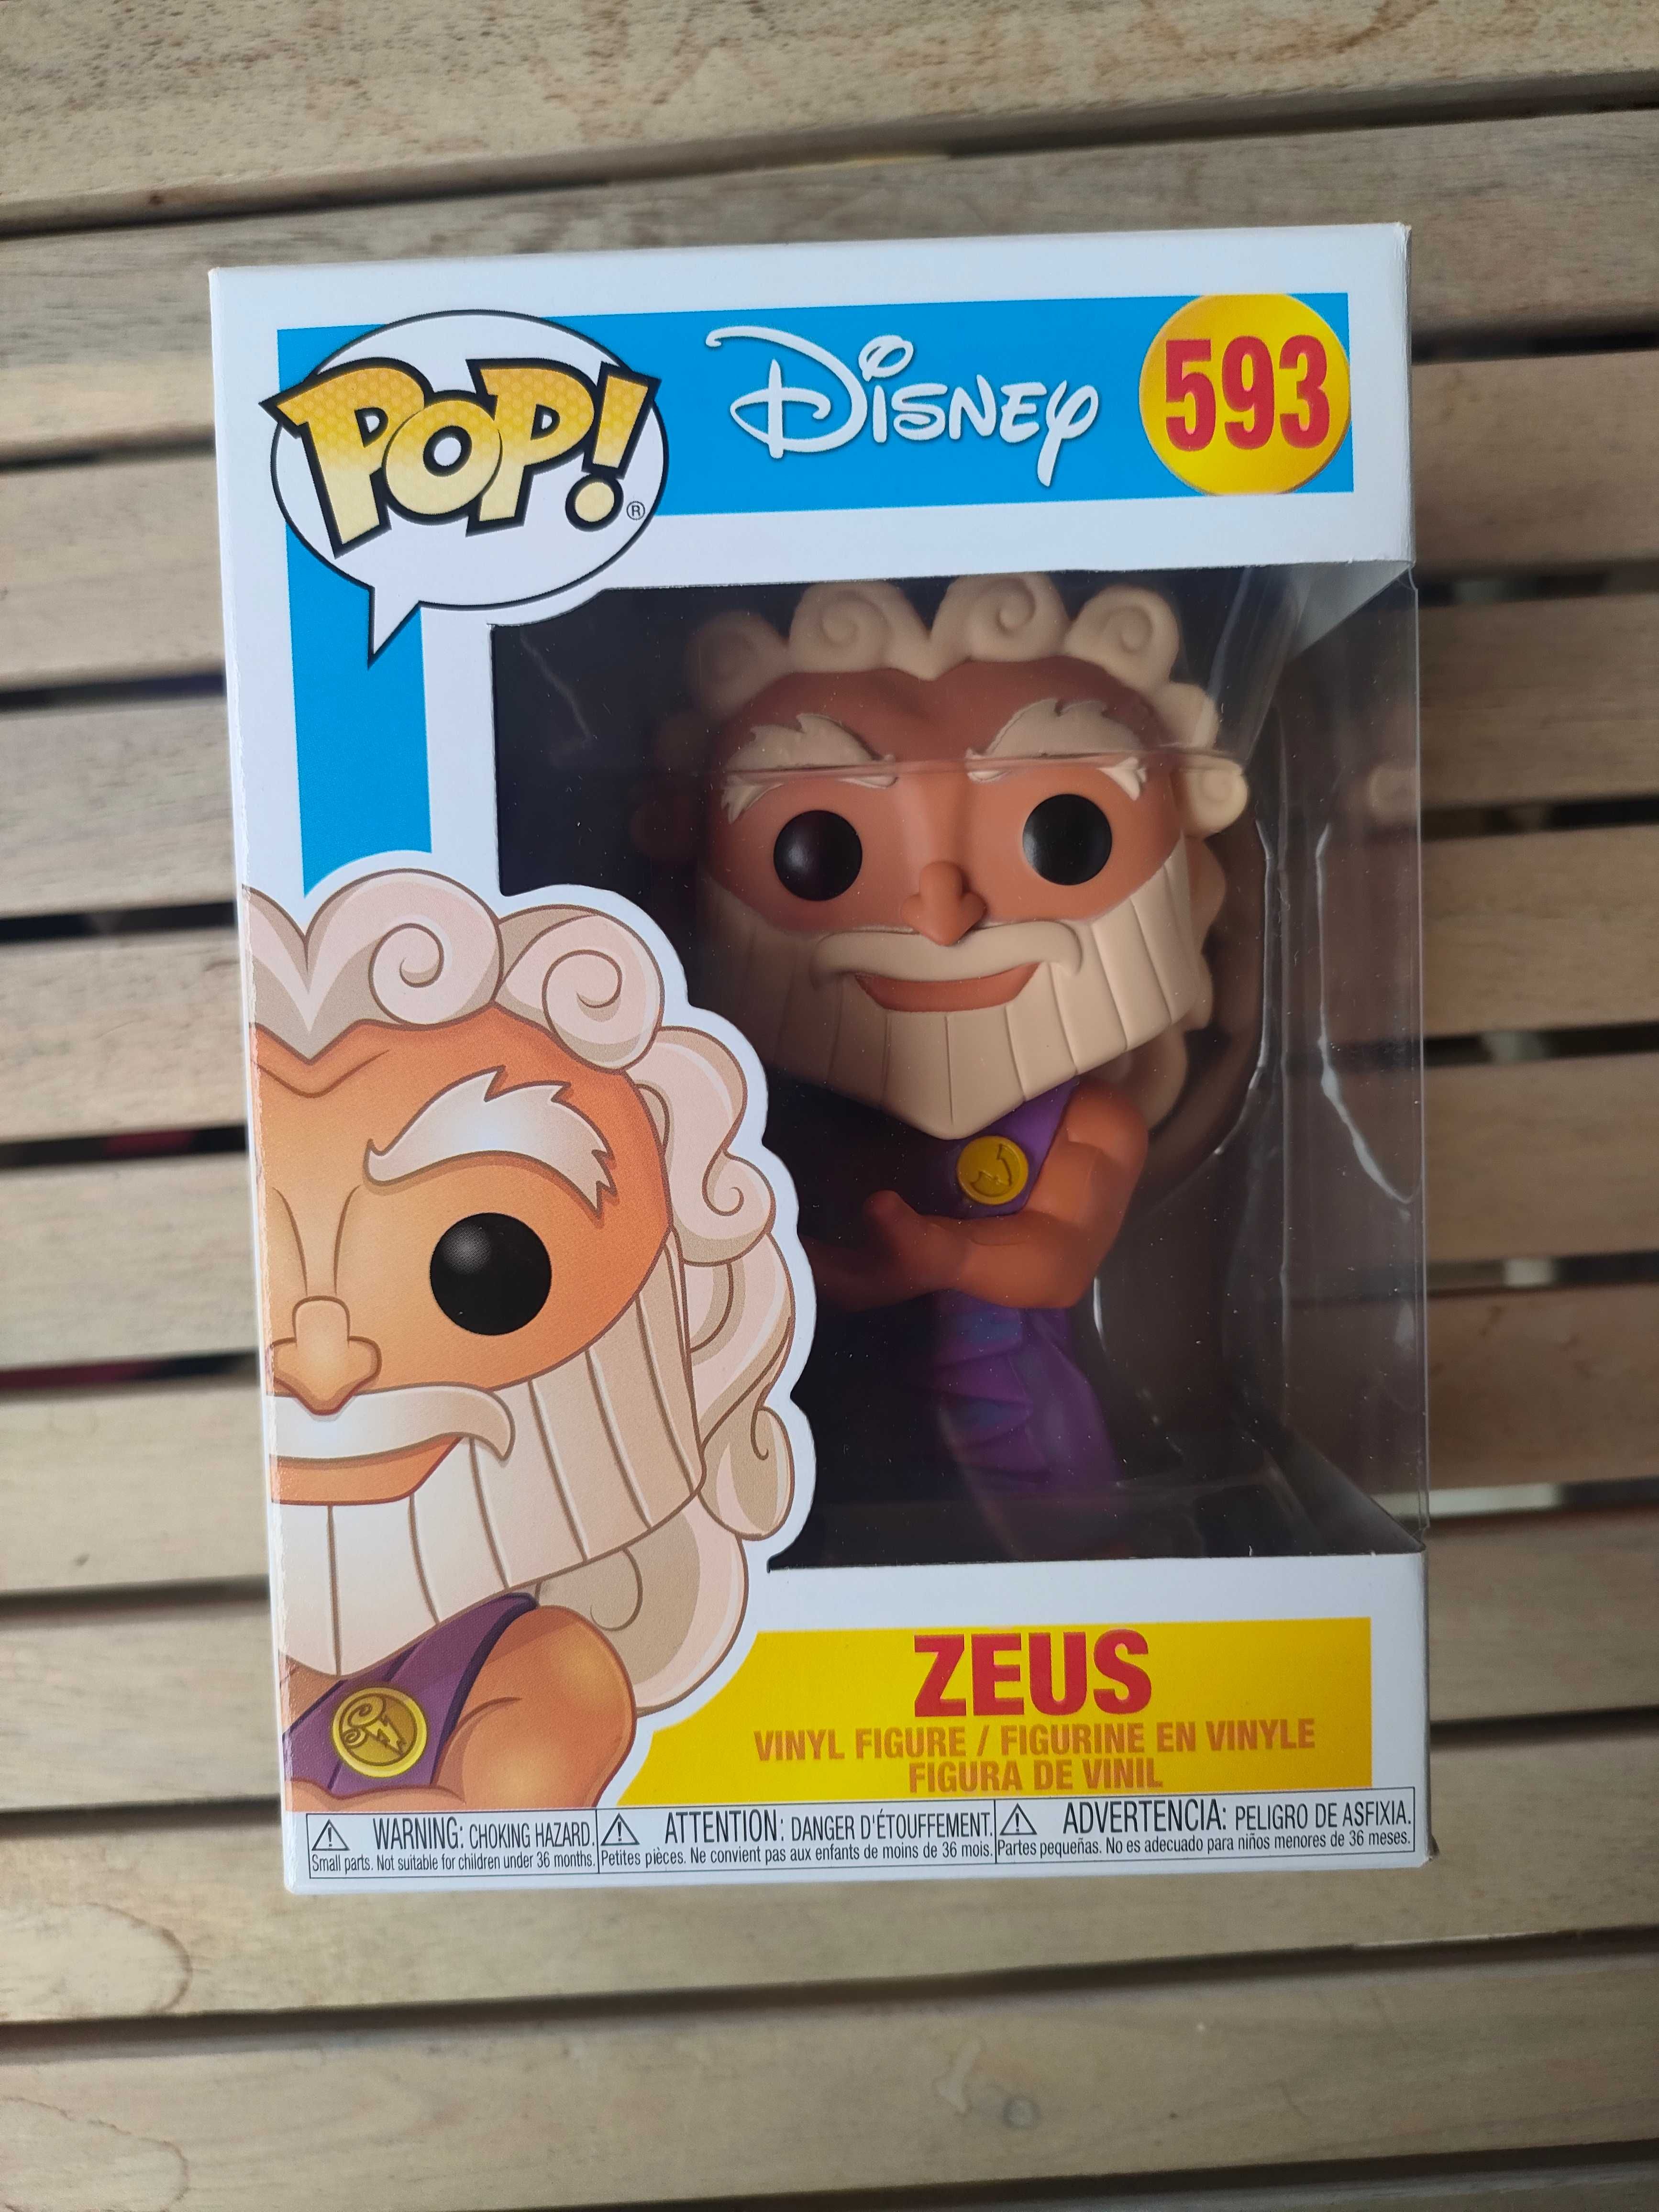 Funko Pop Disney
Zeus 593